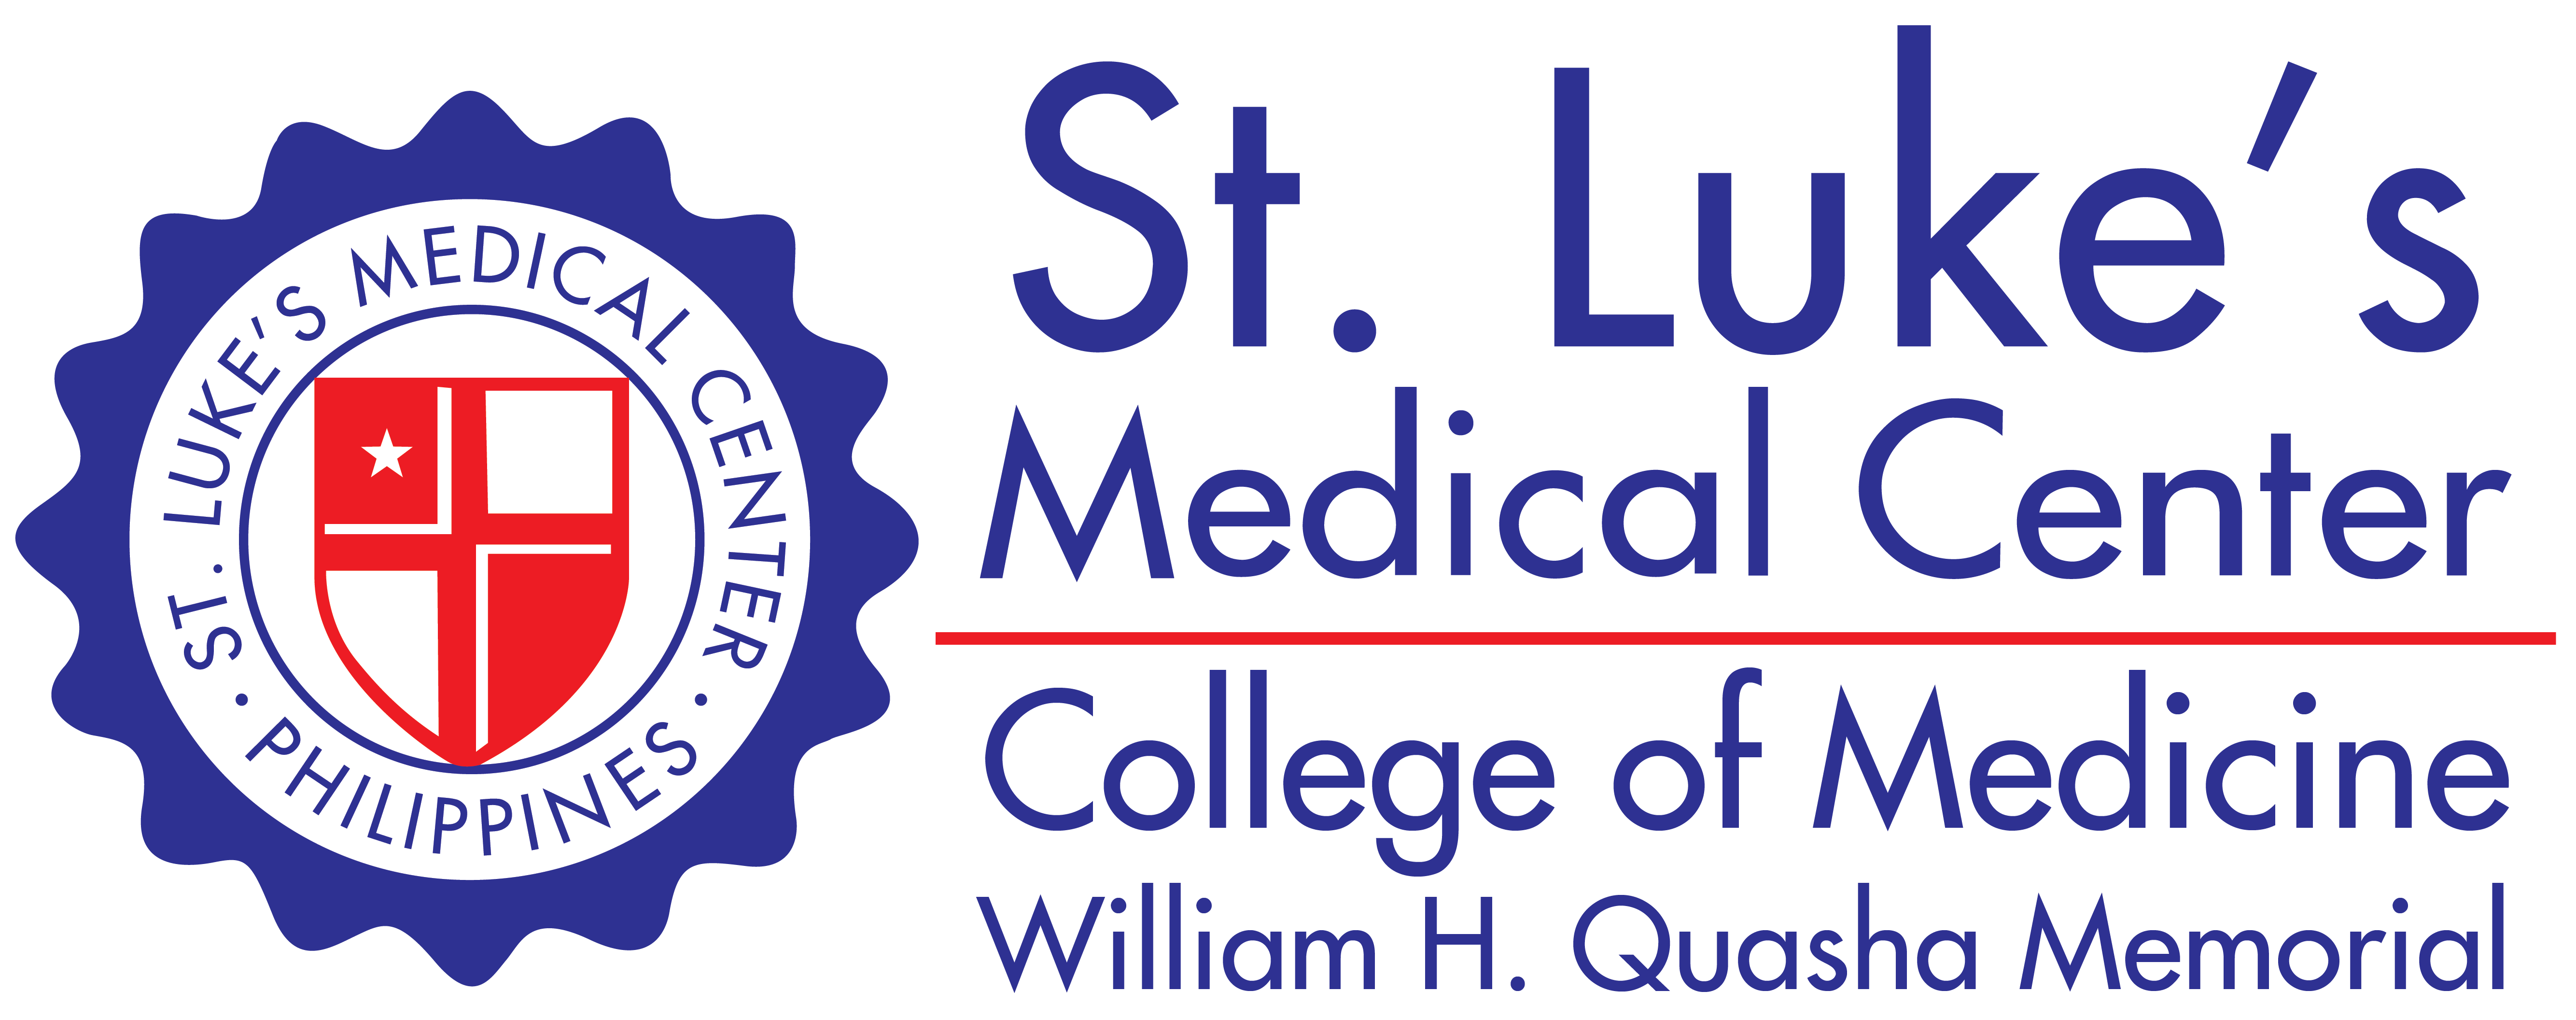 College of medicine final logo 01(crop)